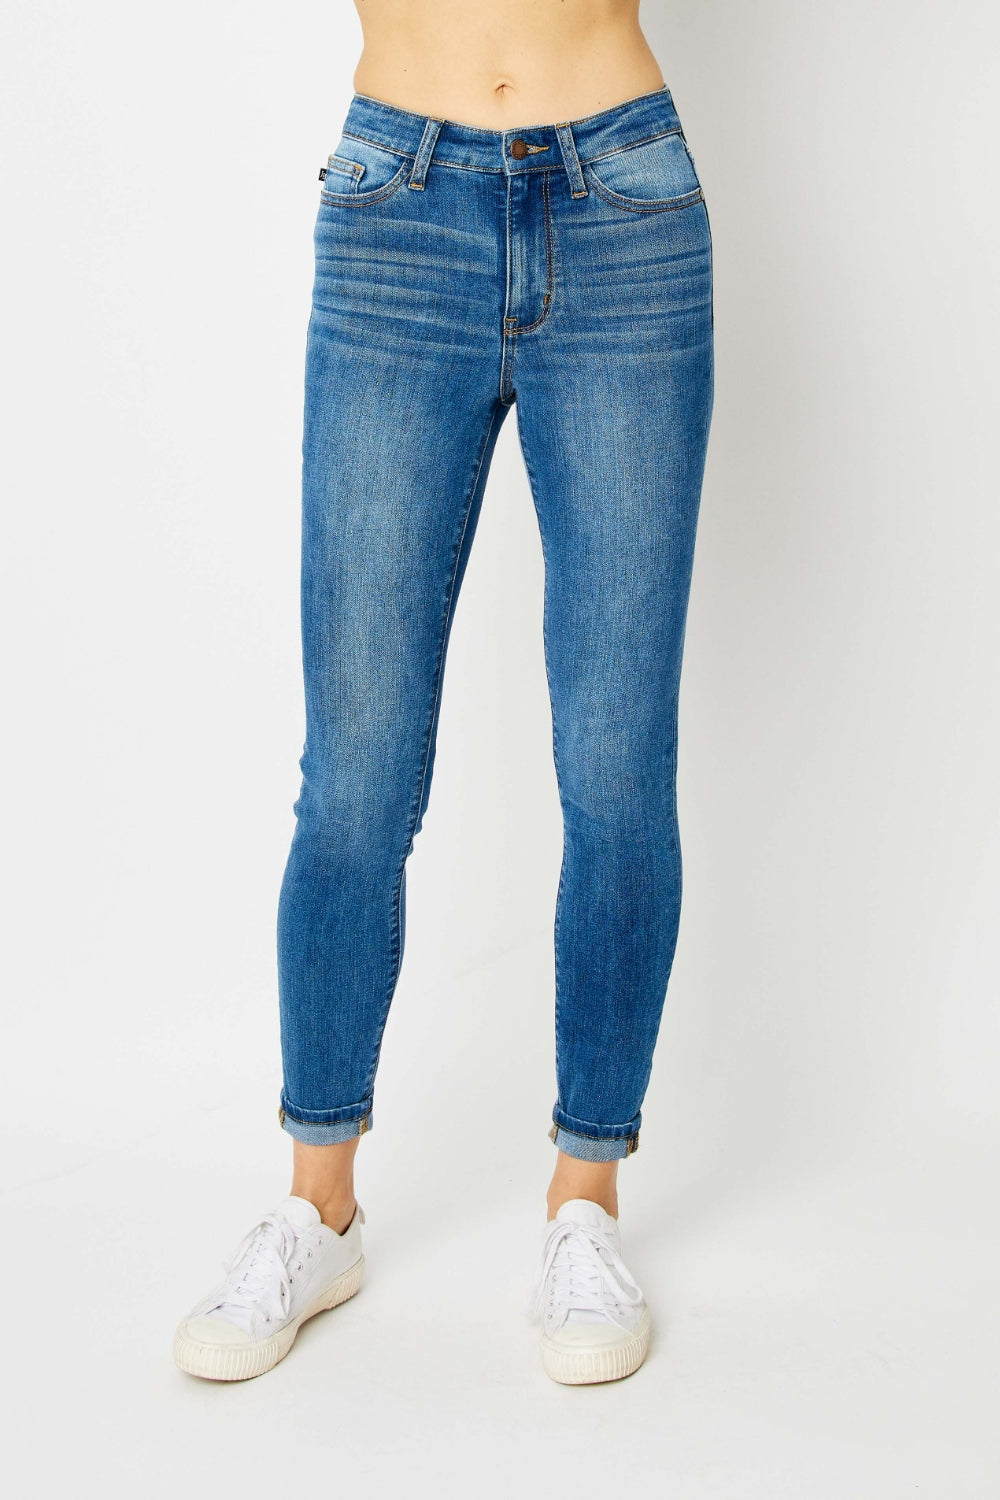 Judy Blue Full Size Skinny Jeans with Stylish Cuffed Hem